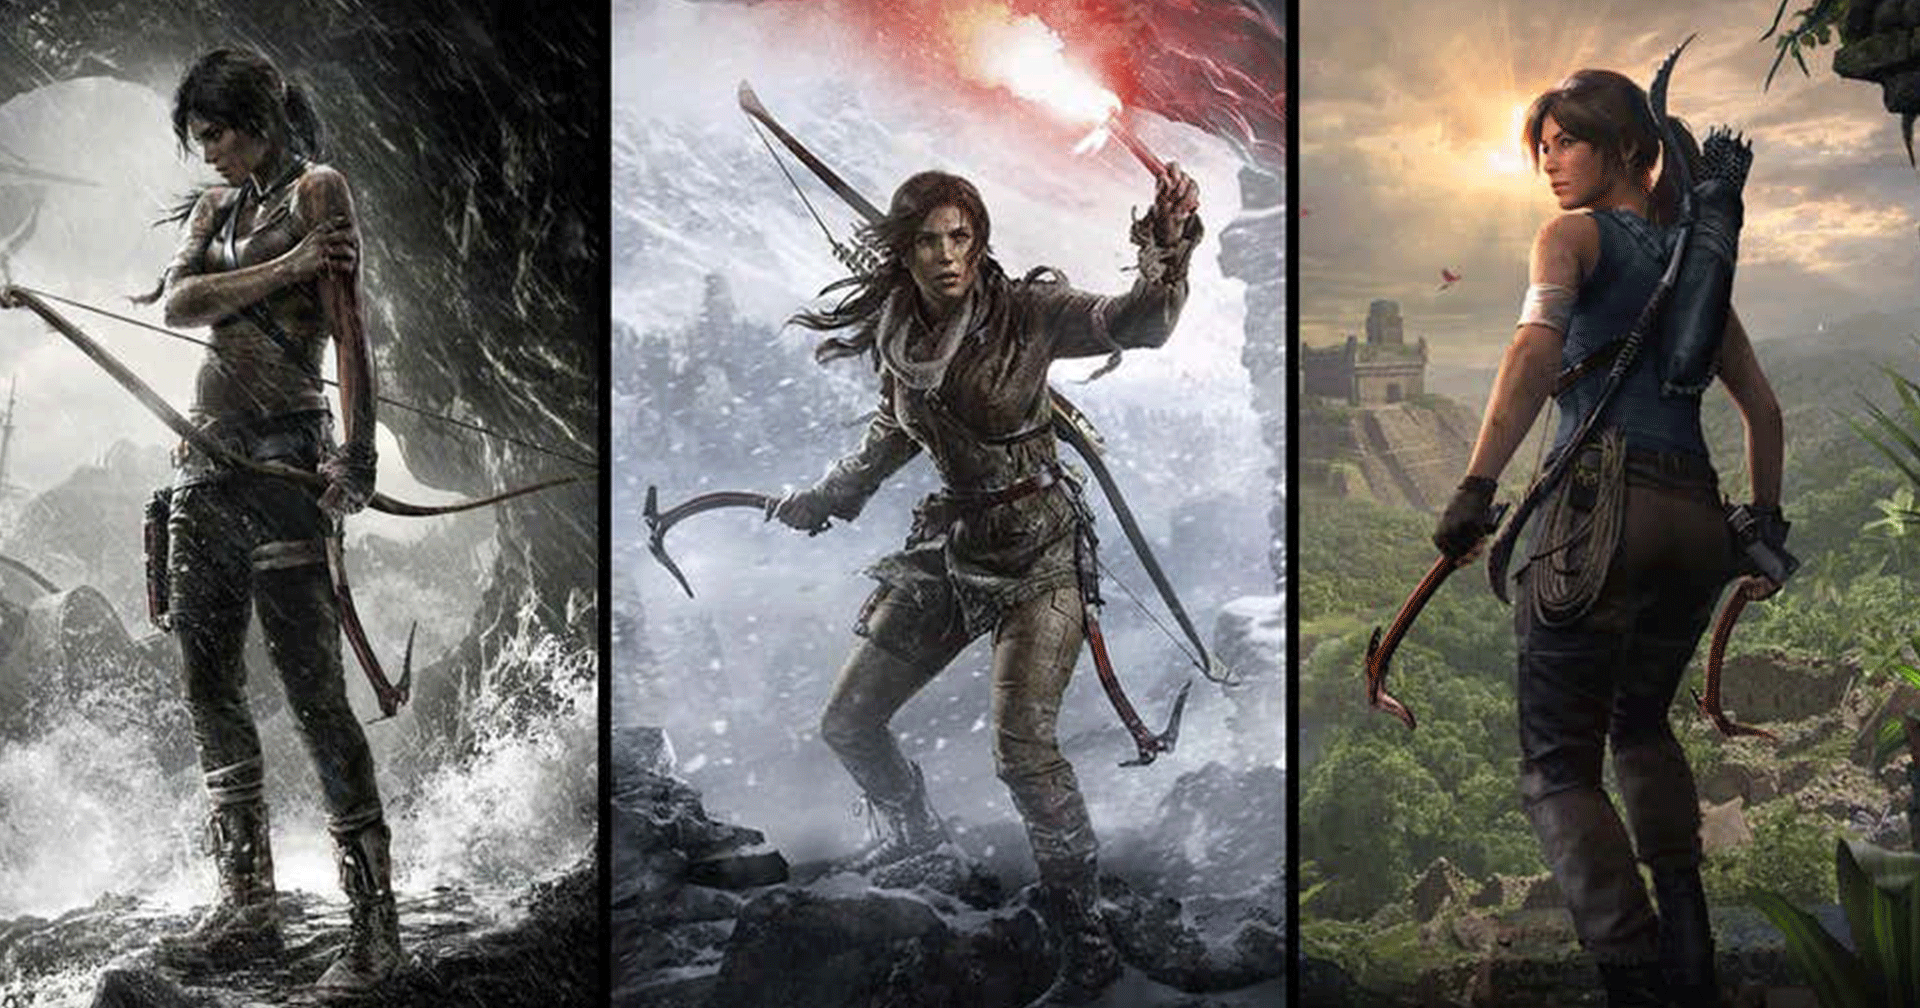 Tomb Raider ทั้ง 3 ภาคแจกฟรี บน Epic Games Store (ตั้งแต่วันนี้ จนถึง 6 ม.ค 2022)